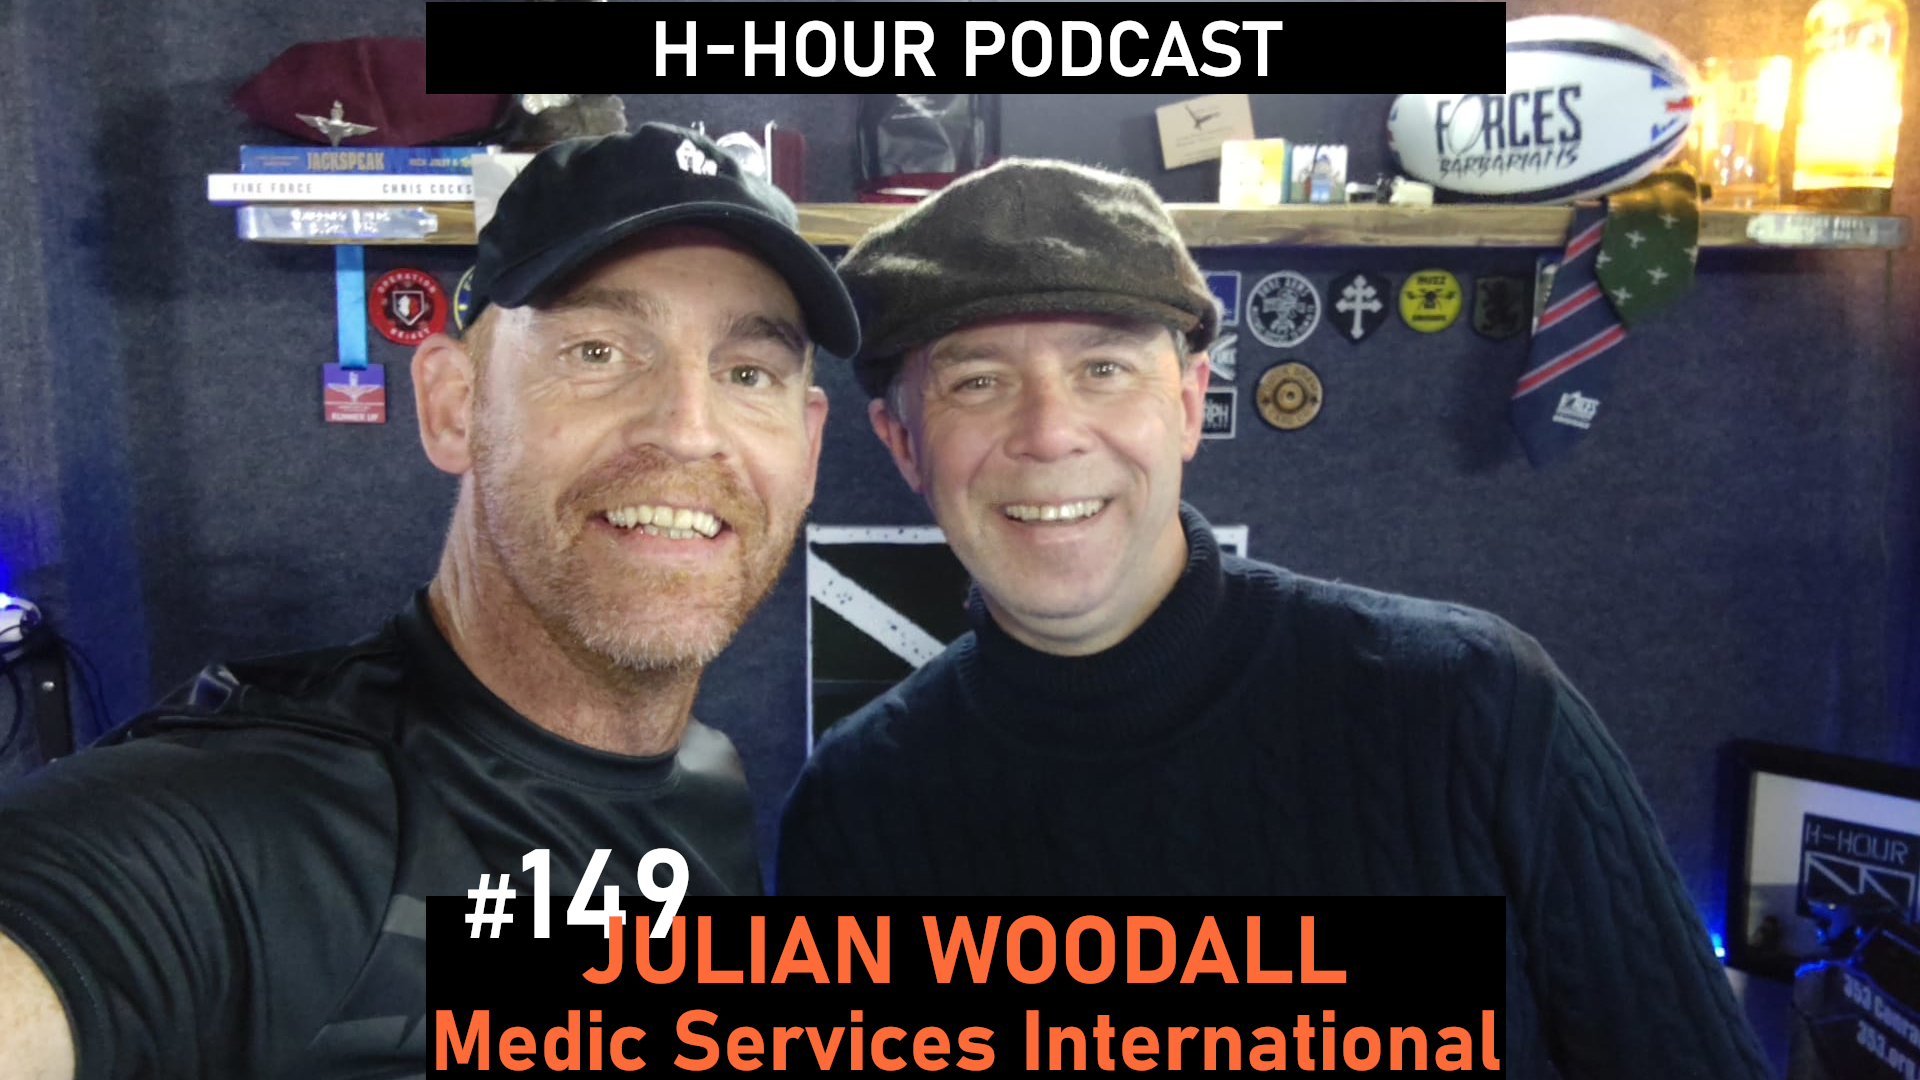 julian woodall on the h-hour podcast with hugh keir